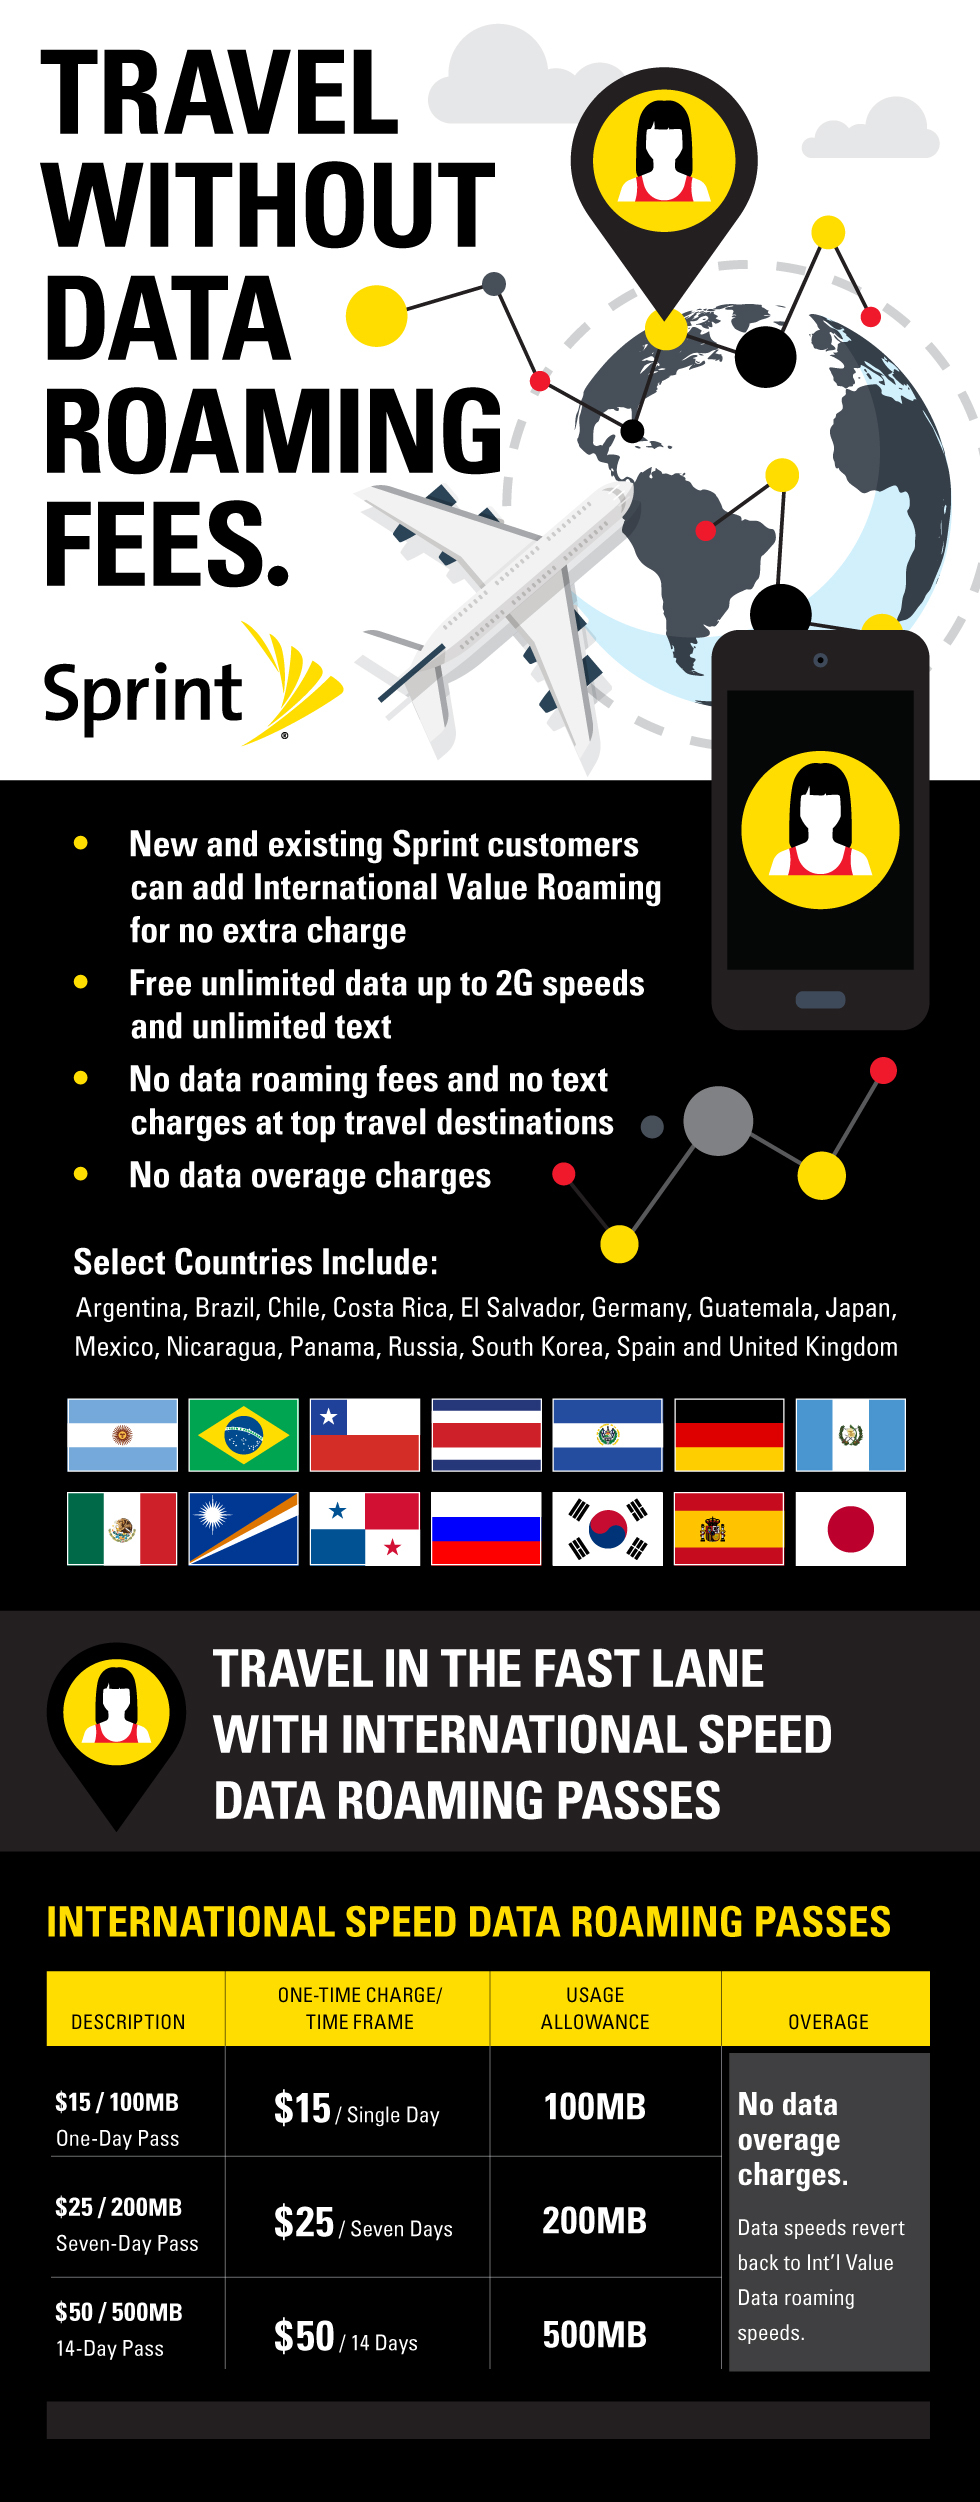 Is international roaming free?